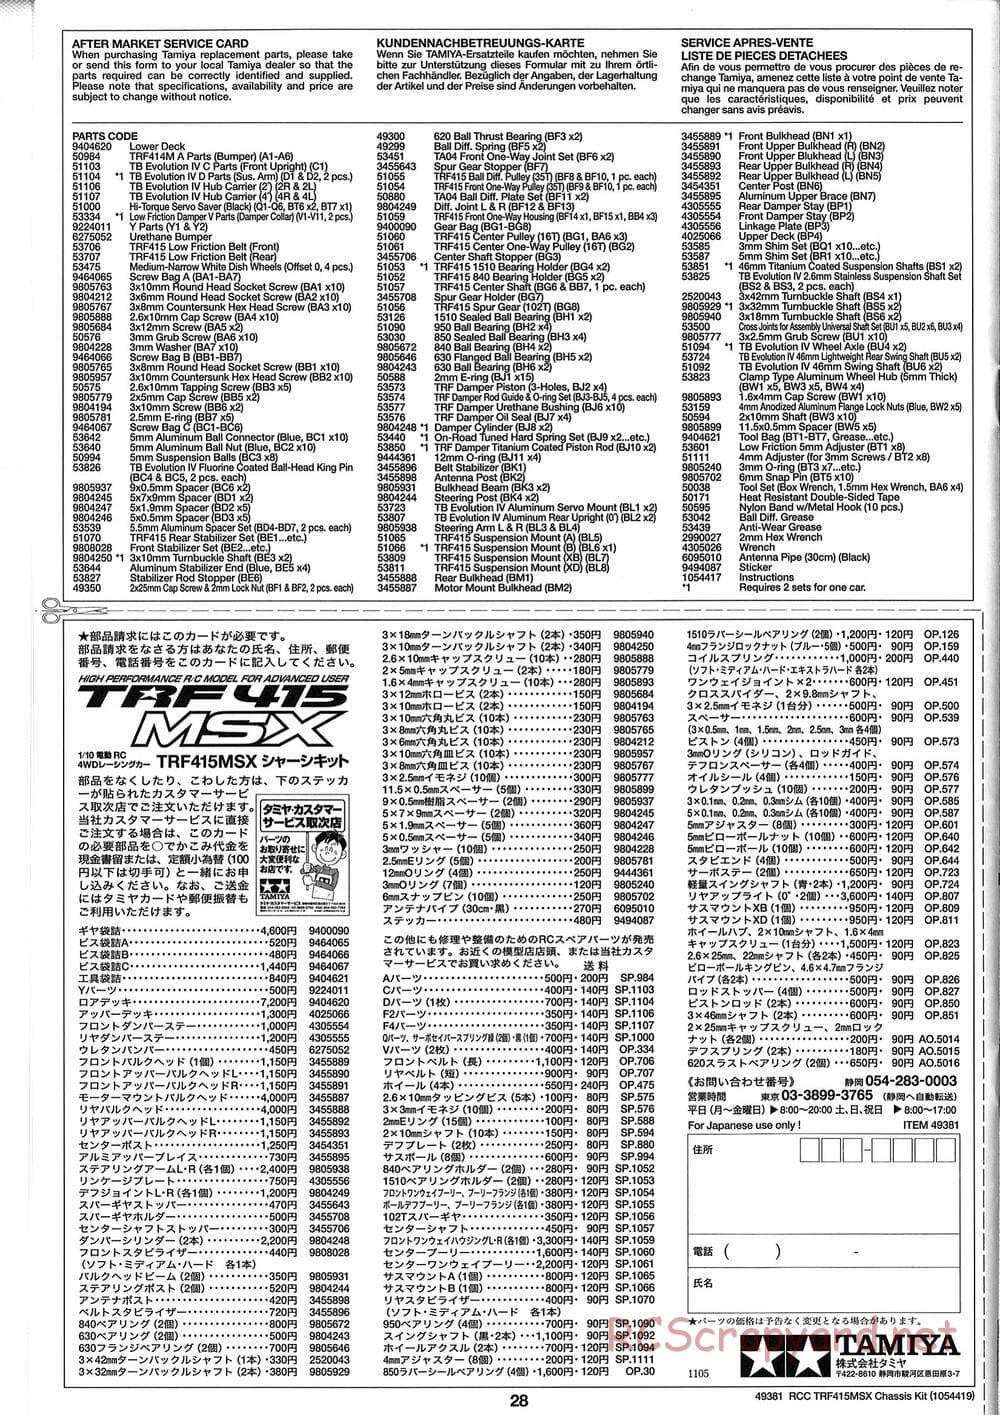 Tamiya - TRF415-MSX Chassis - Manual - Page 28